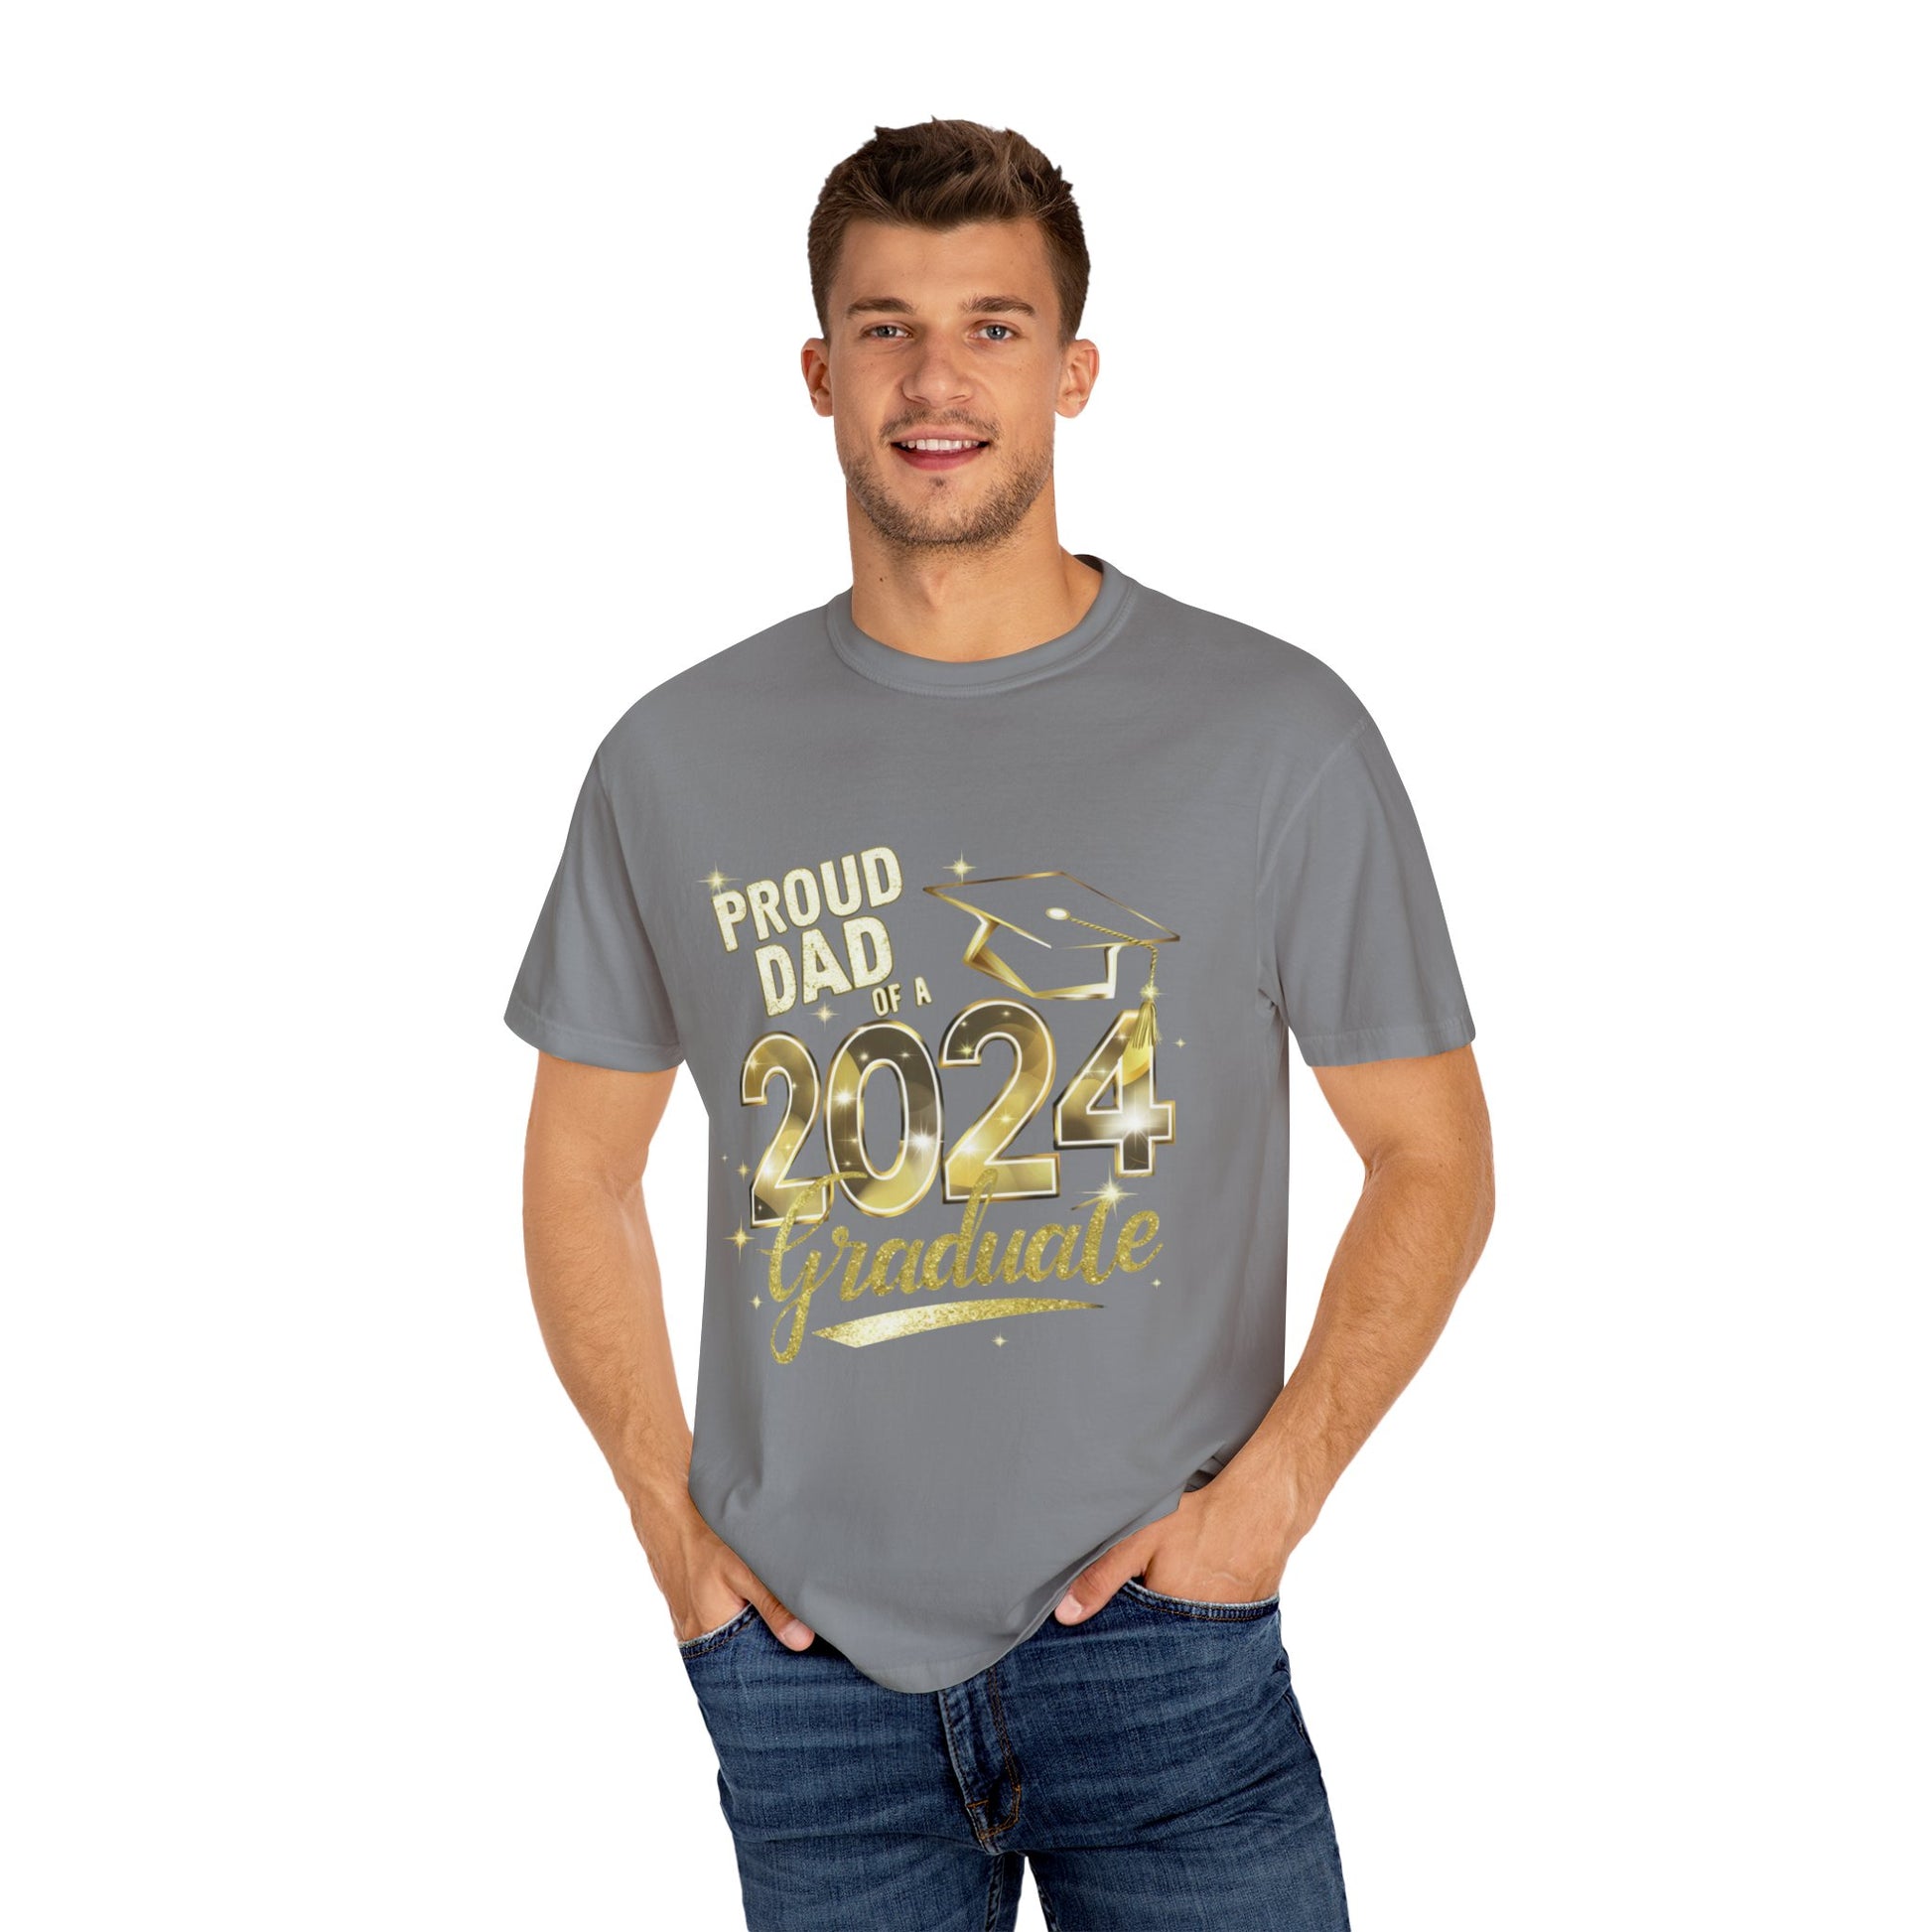 Proud of Dad 2024 Graduate Unisex Garment-dyed T-shirt Cotton Funny Humorous Graphic Soft Premium Unisex Men Women Grey T-shirt Birthday Gift-42